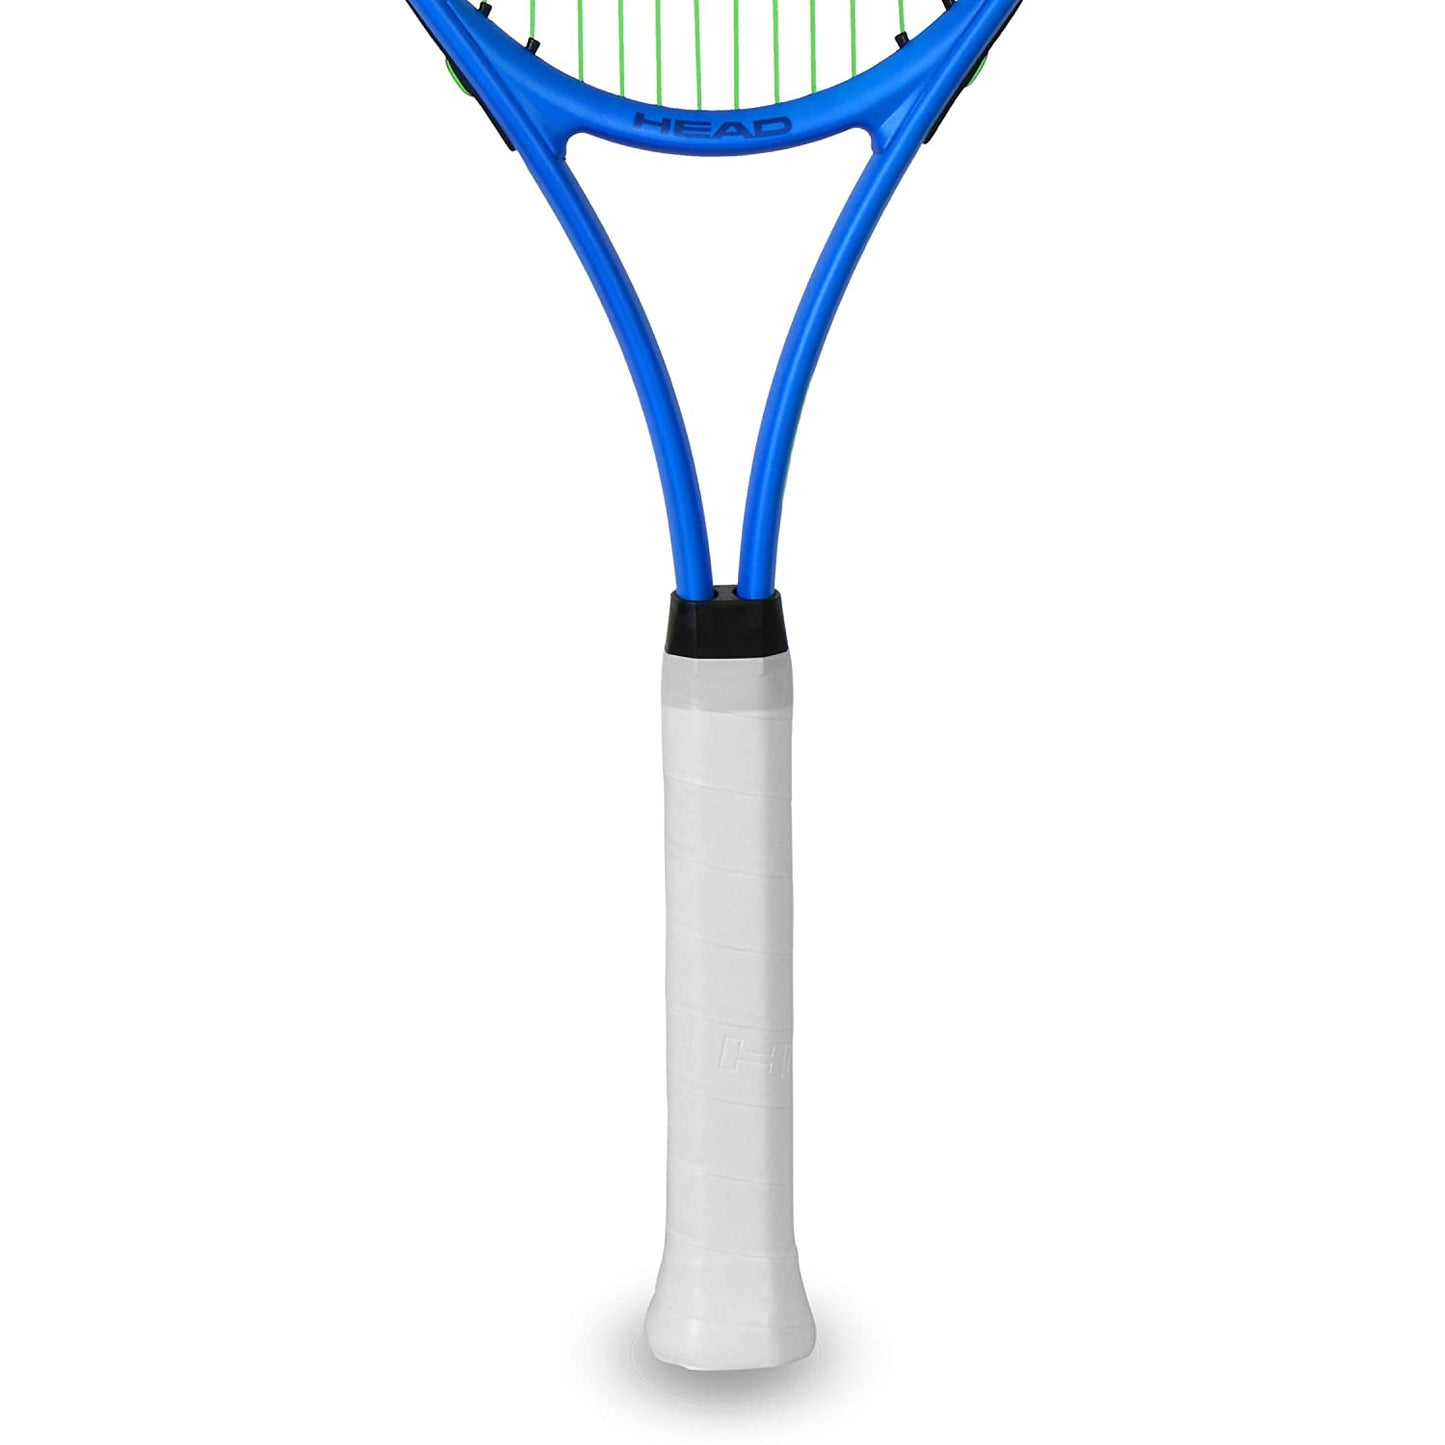 HEAD TI Conquest Graphite Srtung Tennis Racquet , 4/1-4 - Best Price online Prokicksports.com